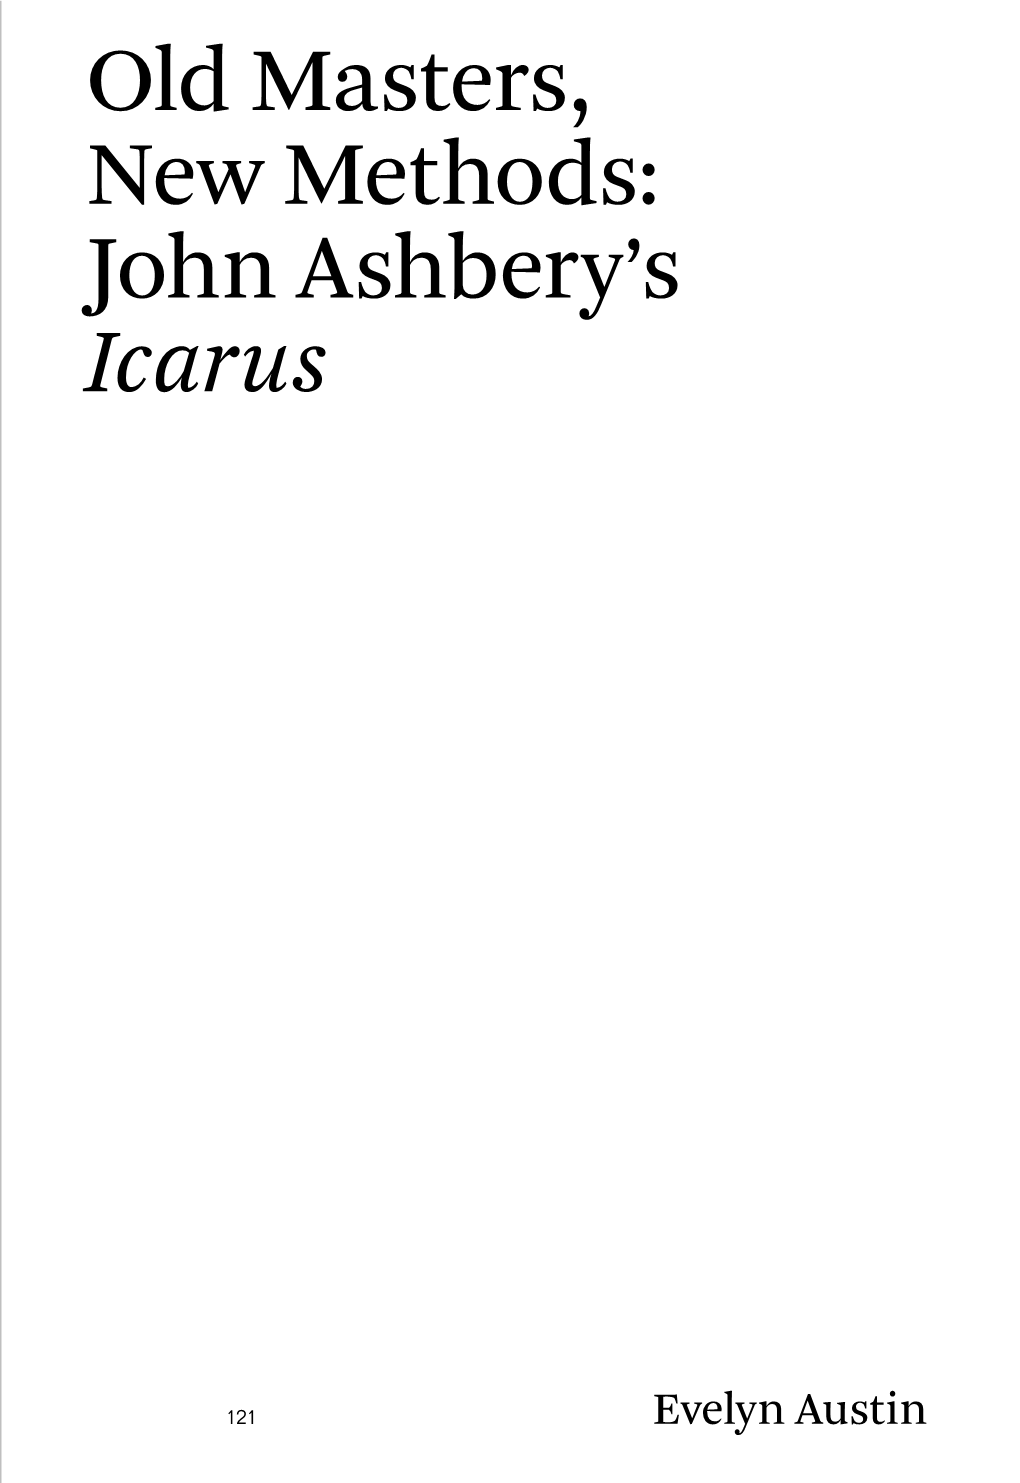 John Ashbery's Icarus